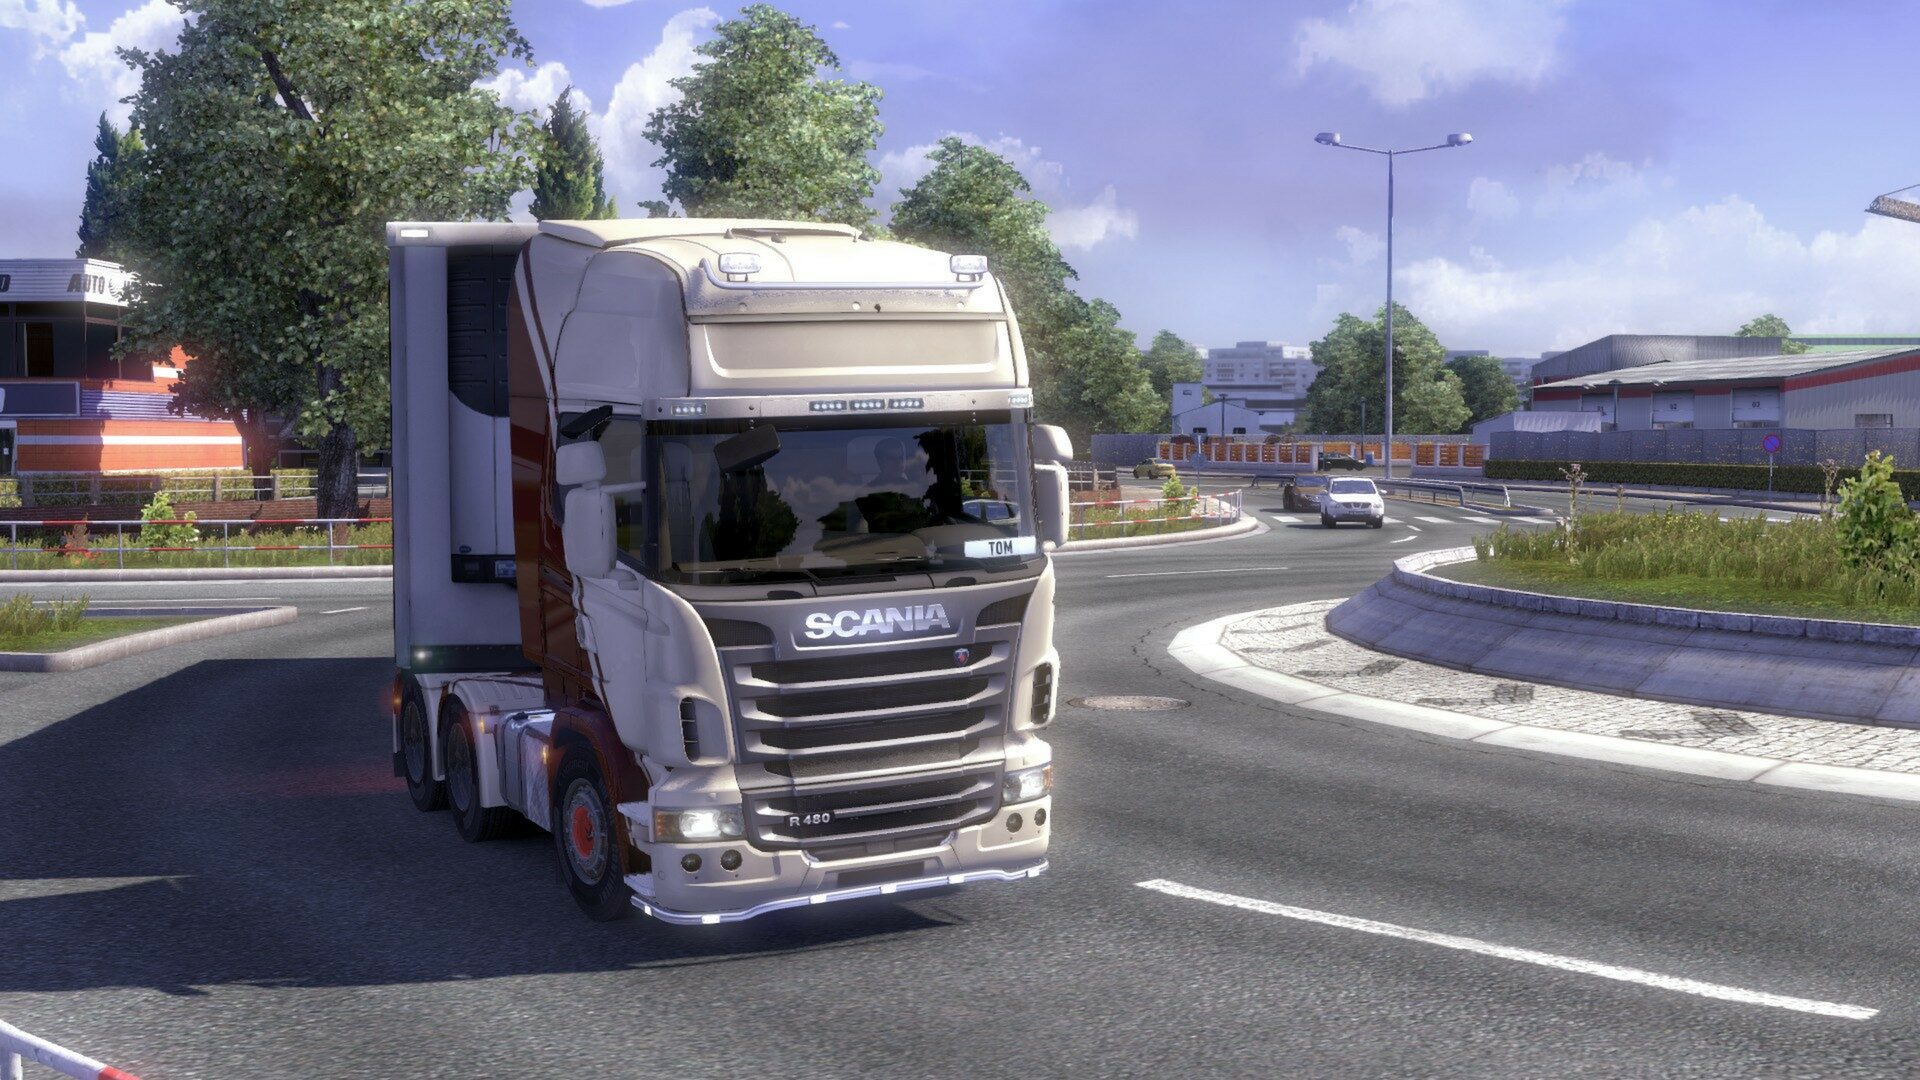 Euro Truck Simulator 2 Heavy Cargo Edition